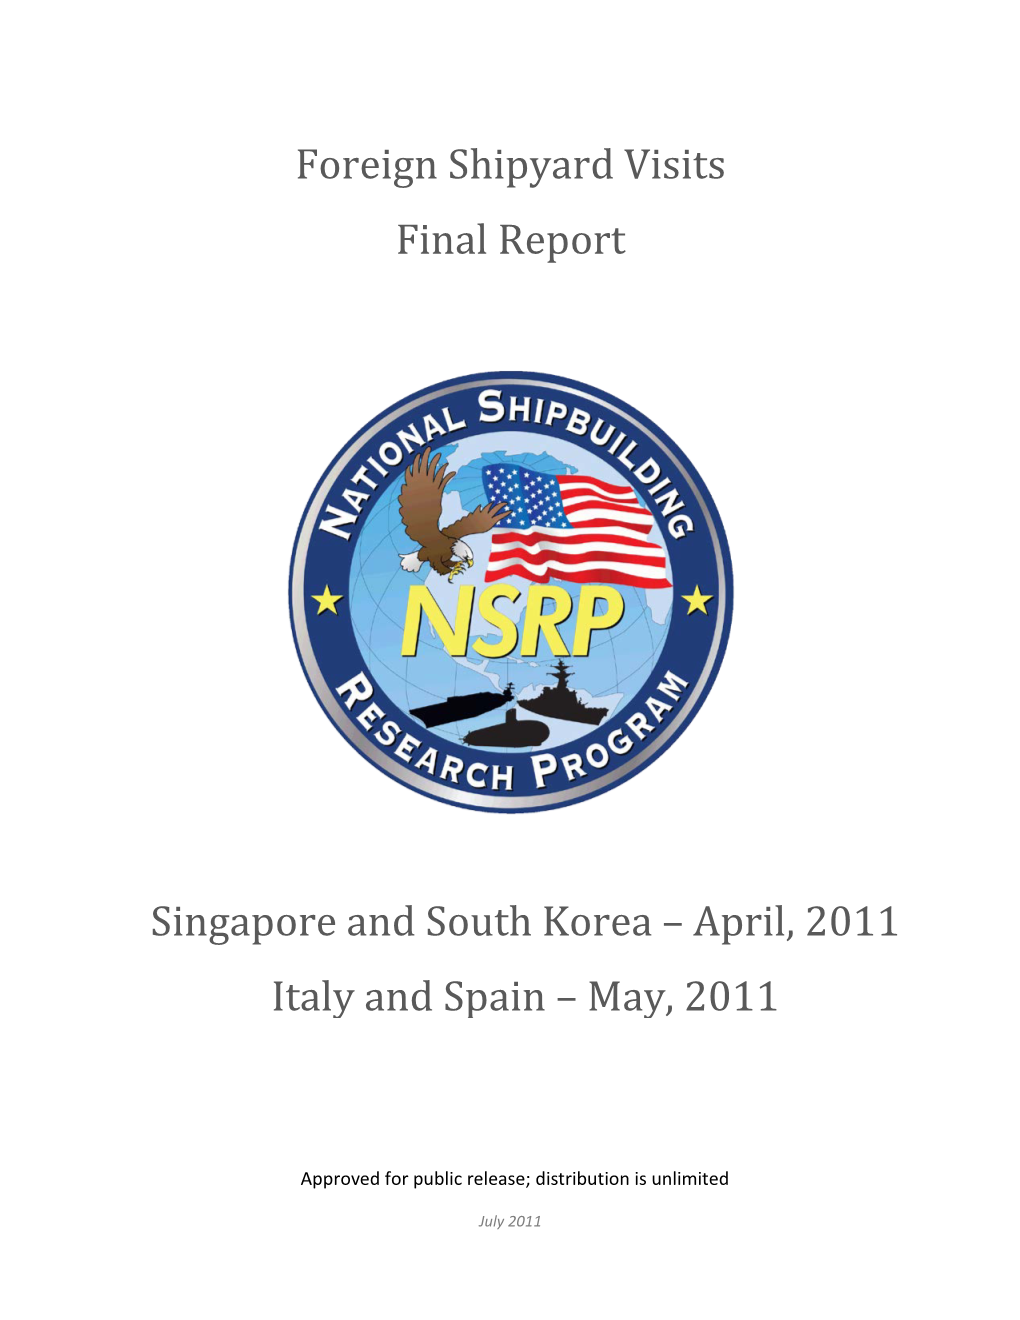 Foreign Shipyard Visits Public Report